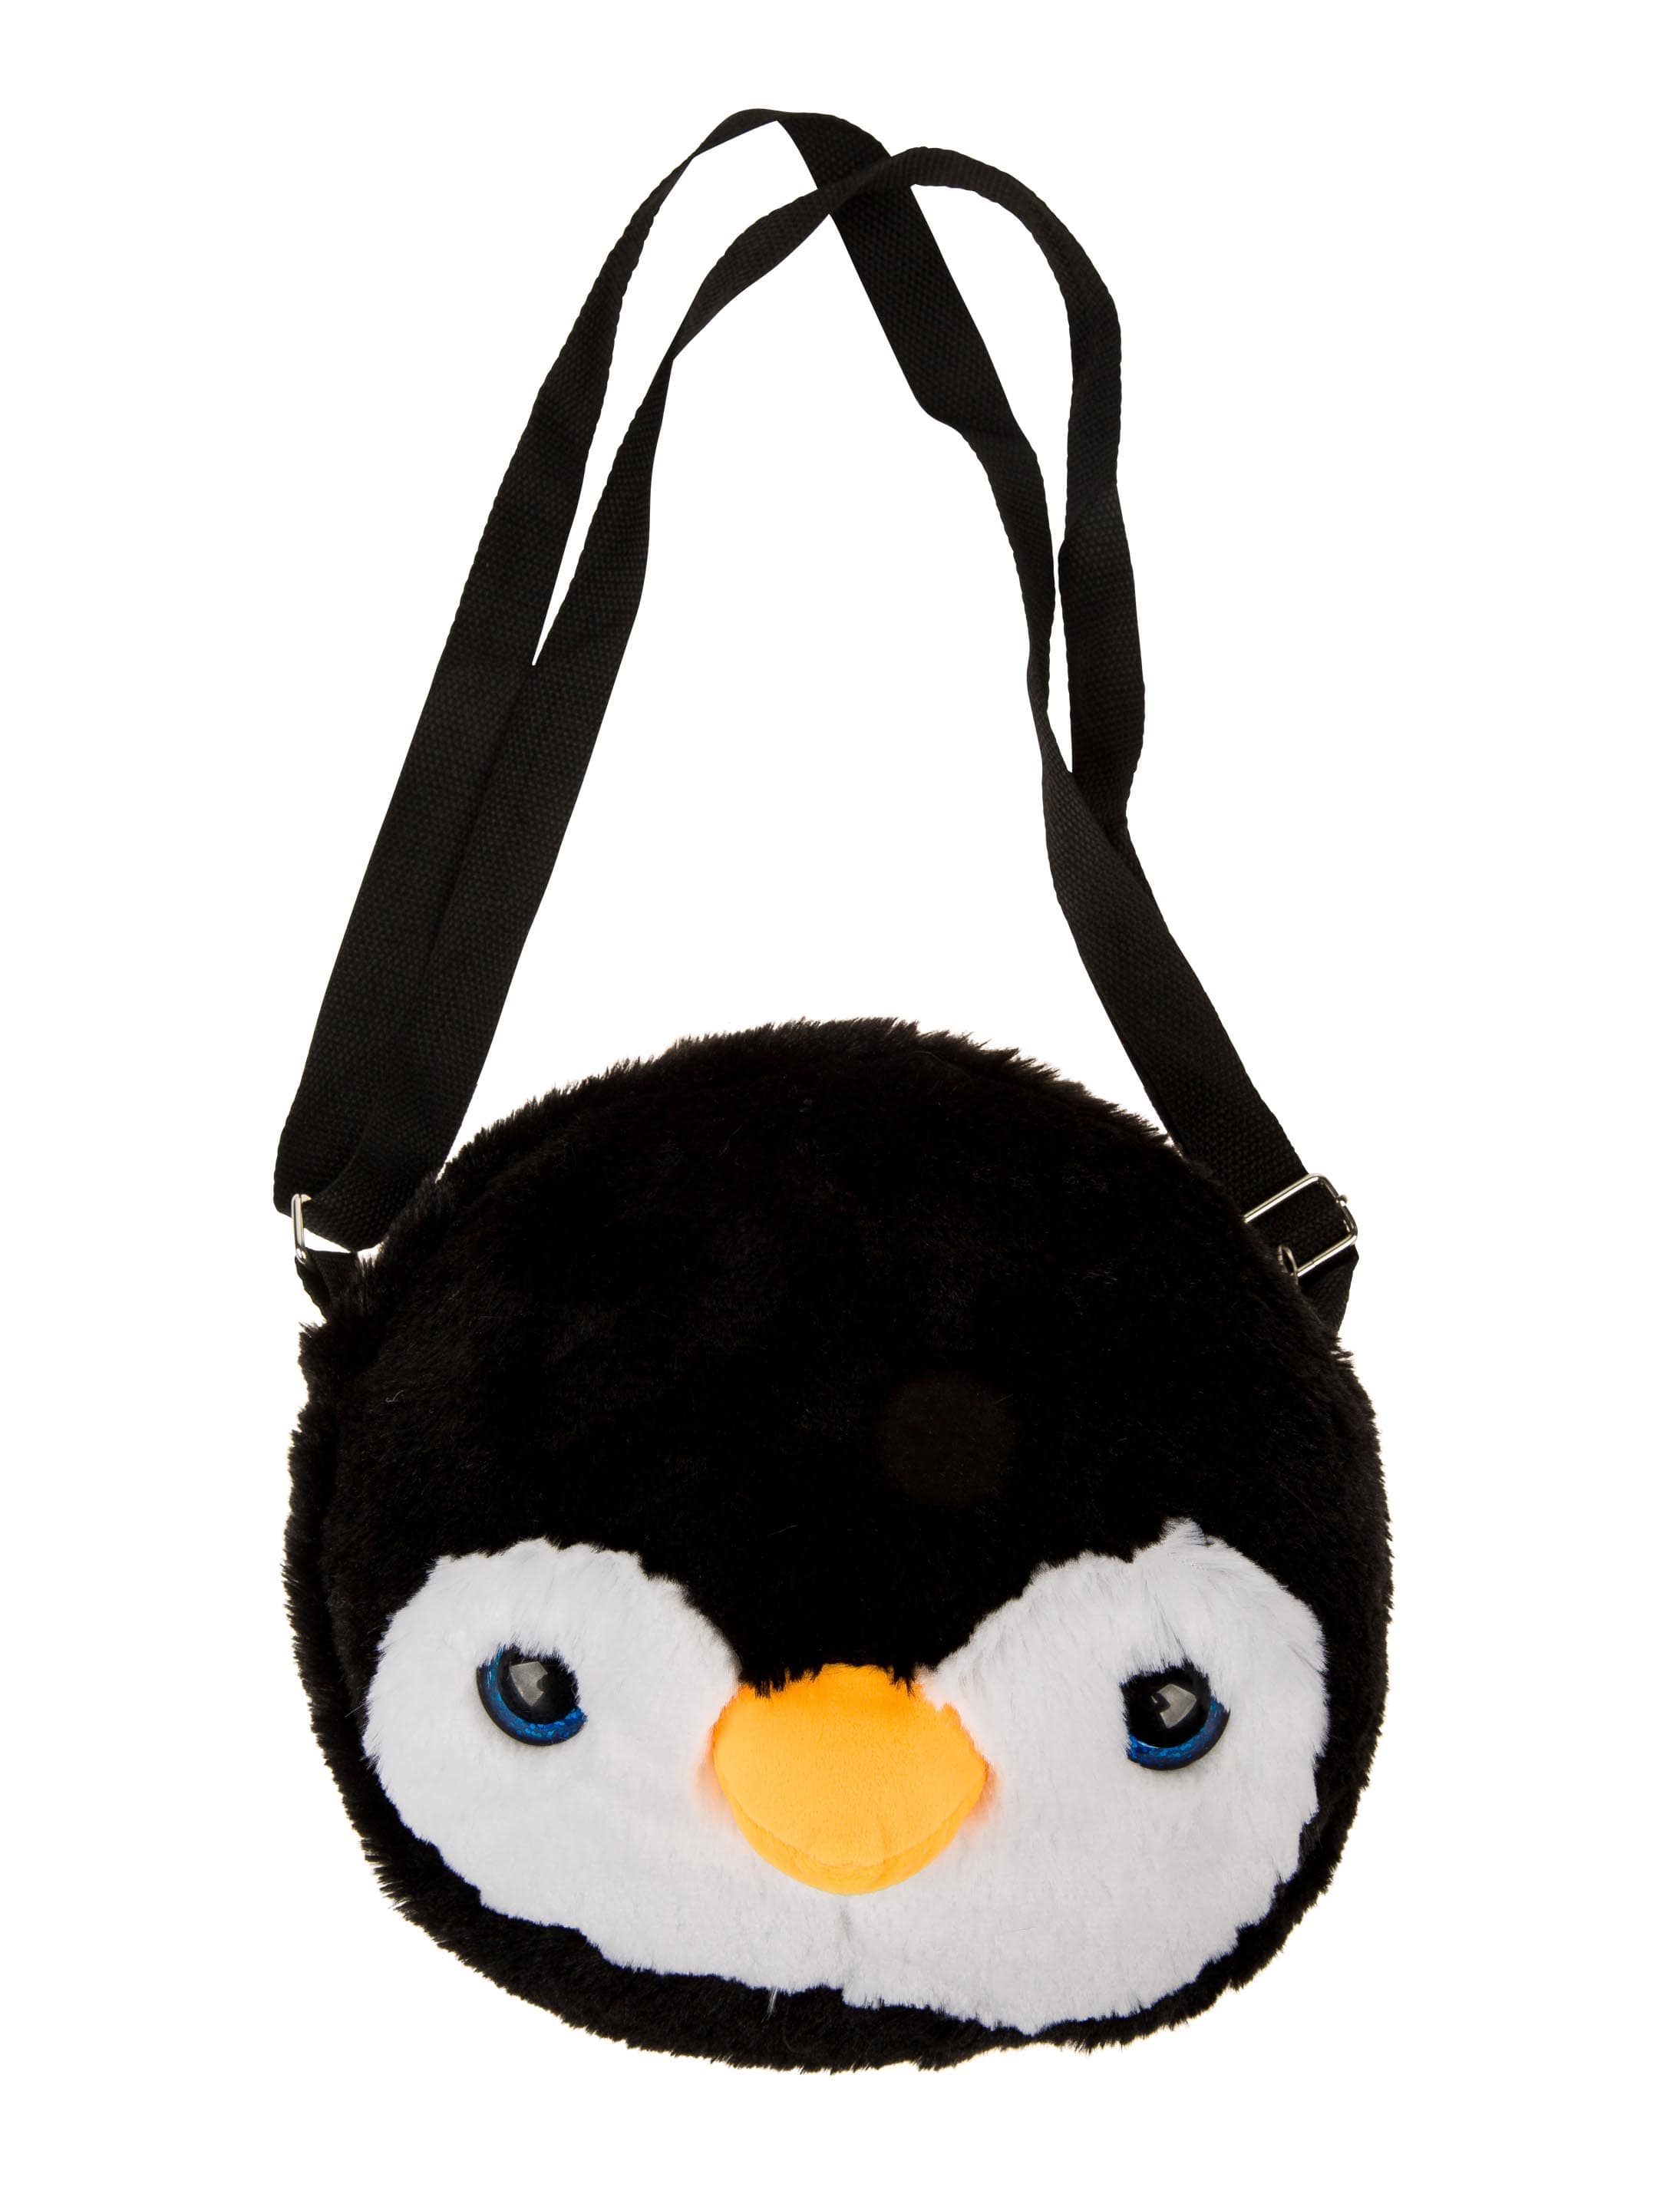 Tasche Pinguinkopf